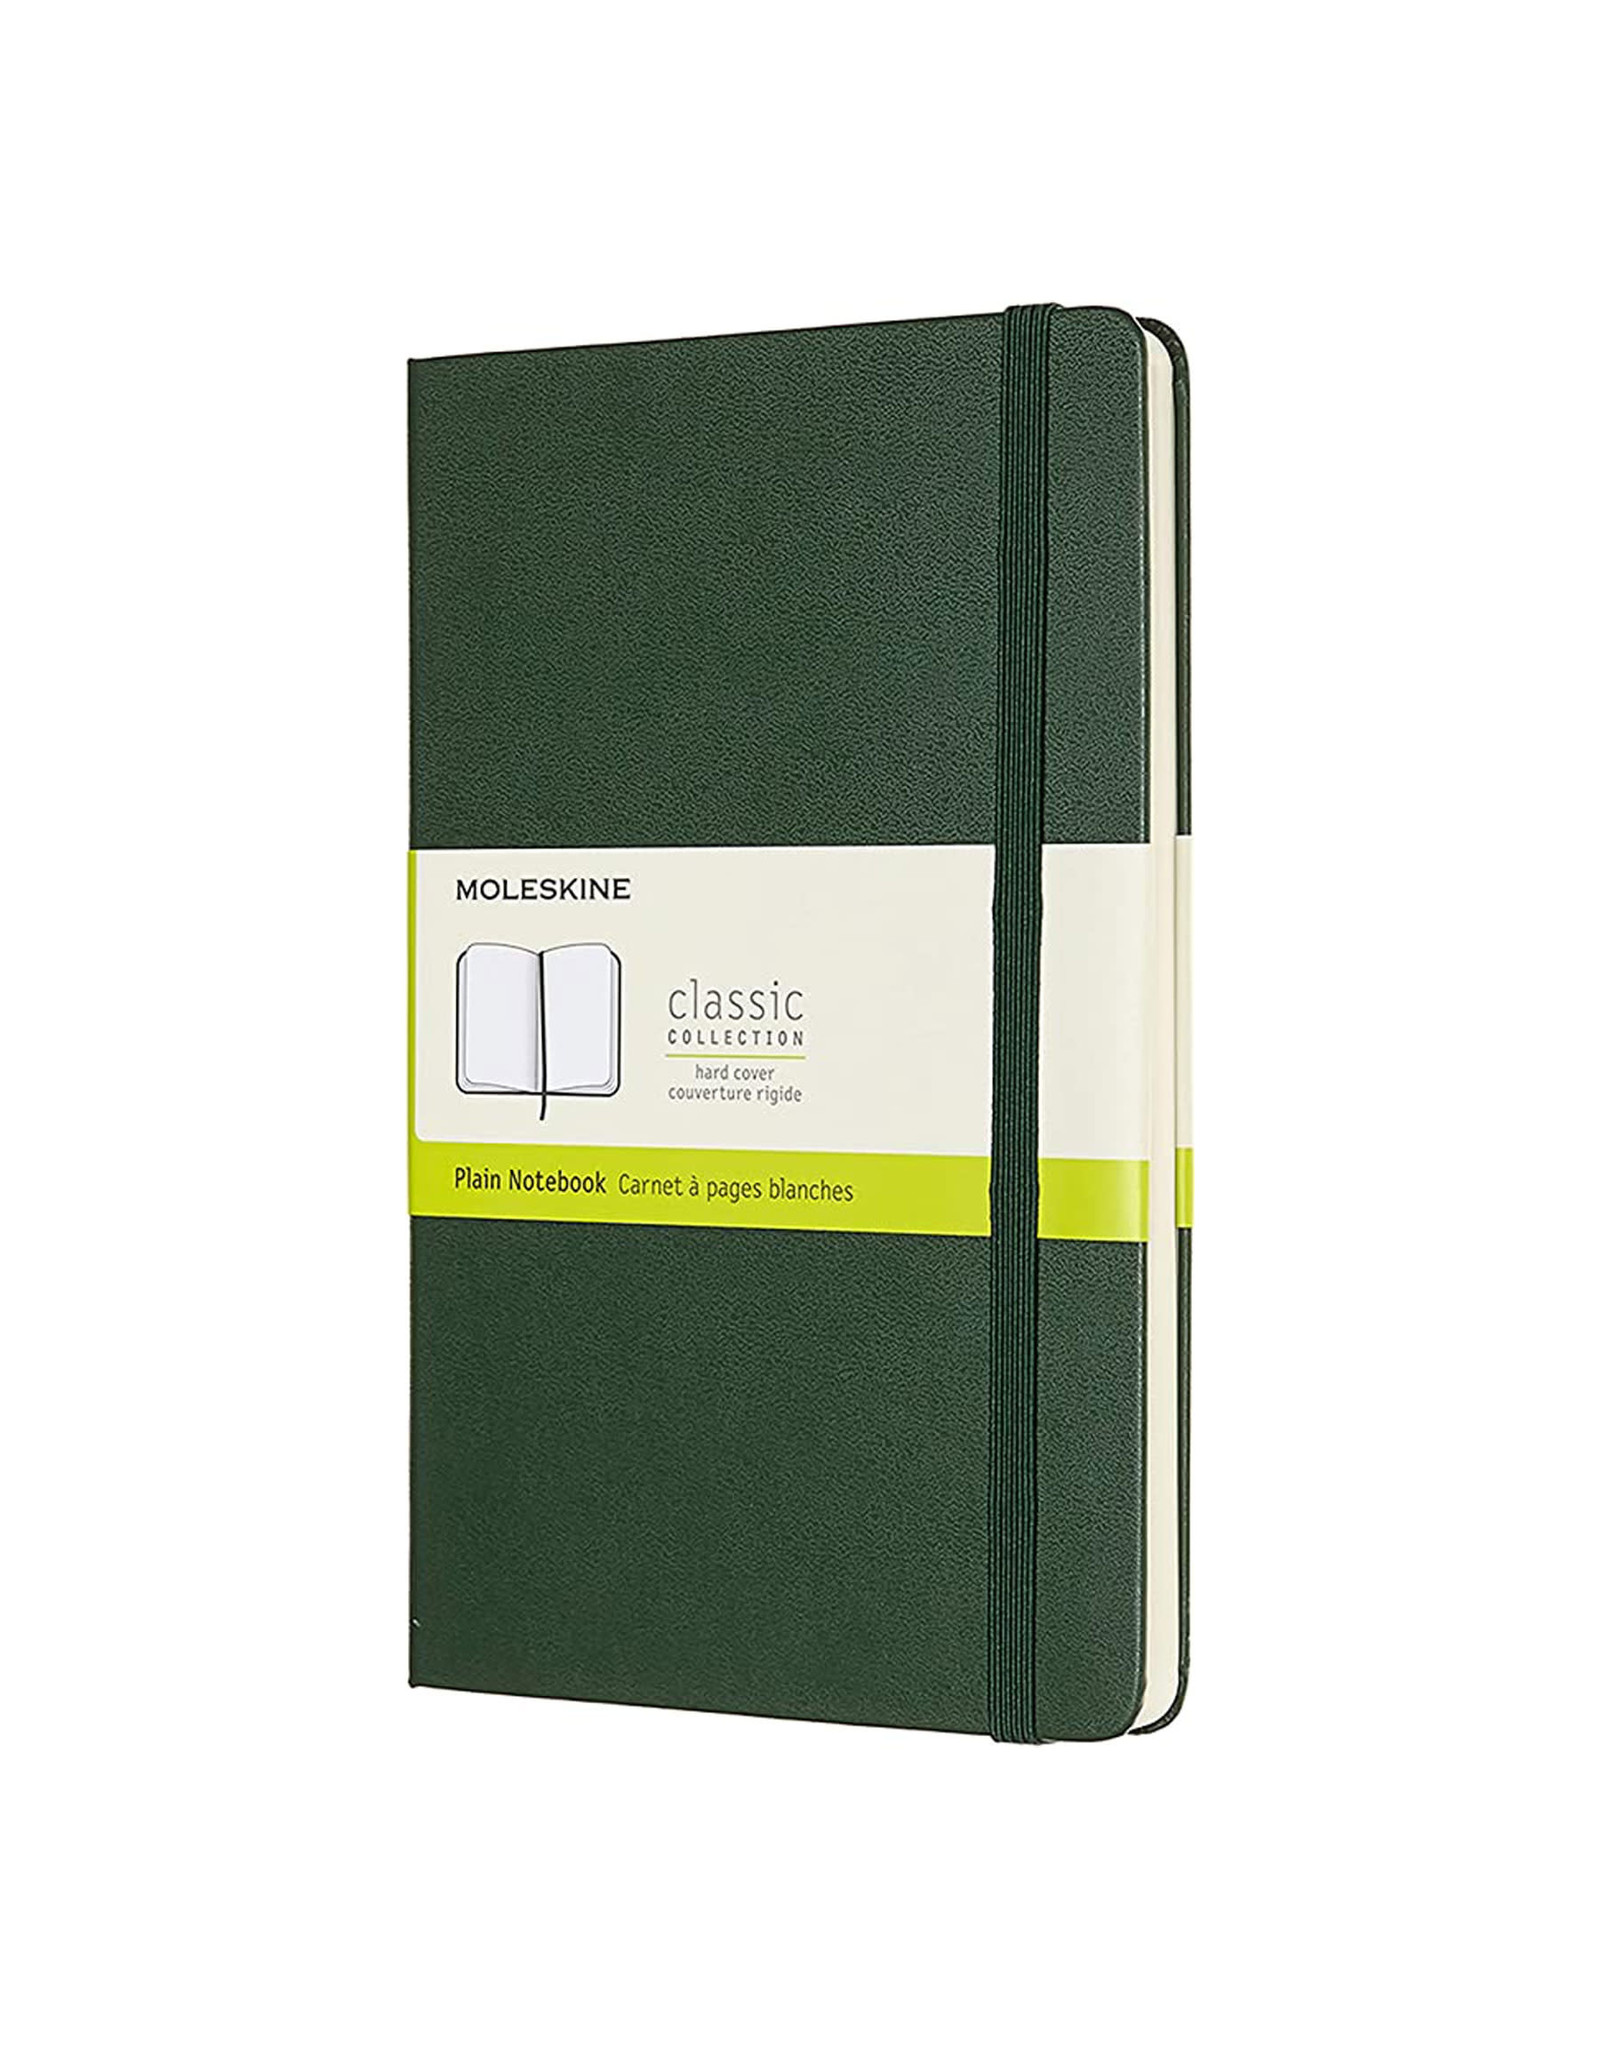 Moleskine Notebook, Large, Plain, Myrtle Green, Hard